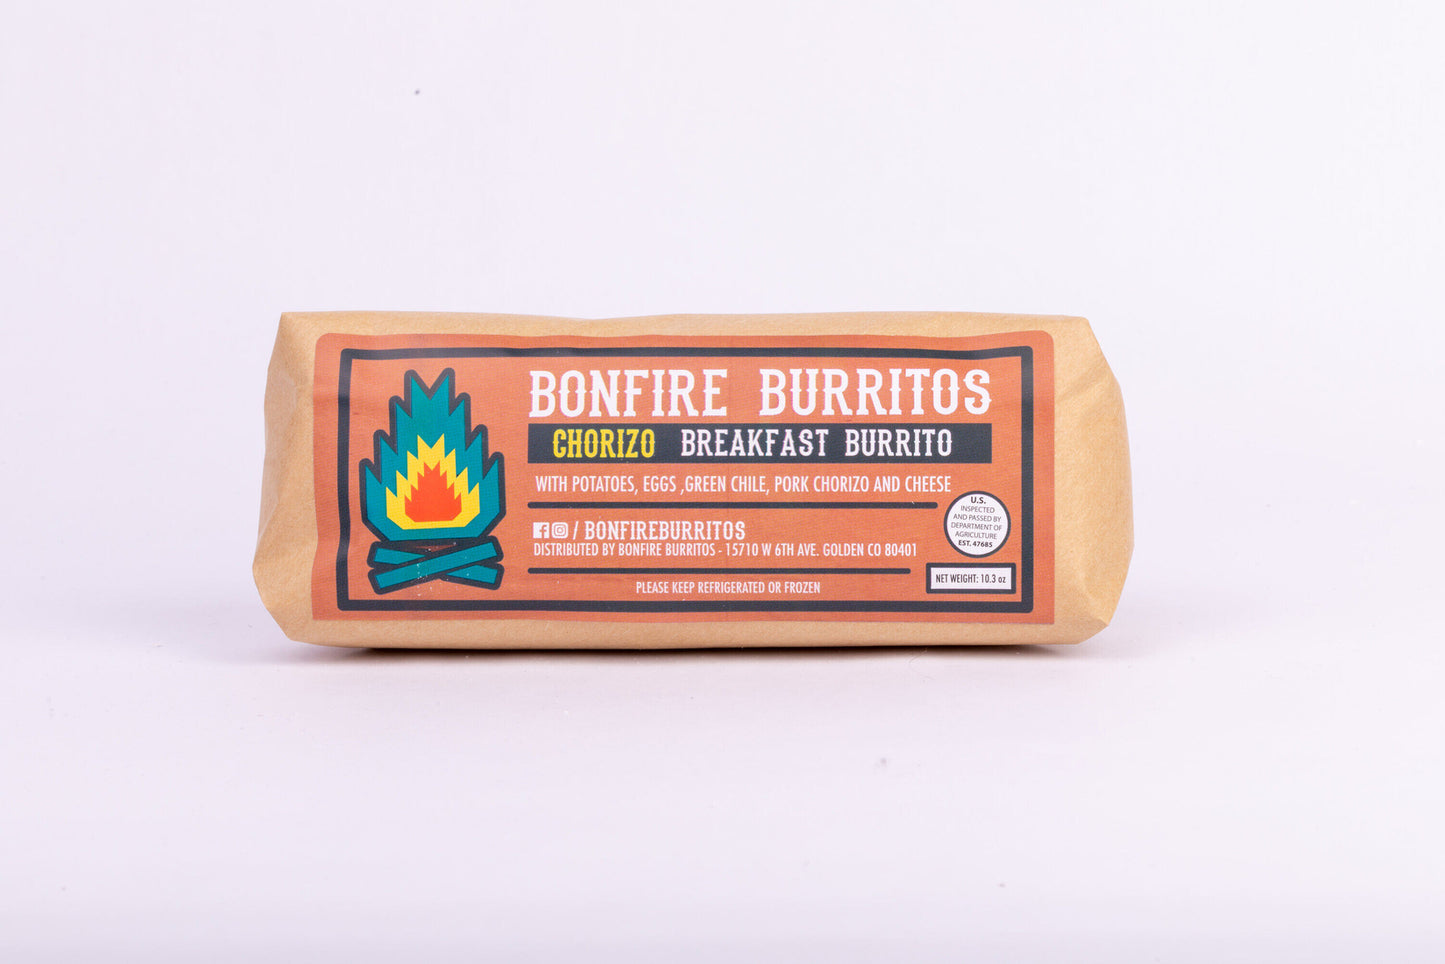 Bonfire Burrito Chorizo (4 pack)